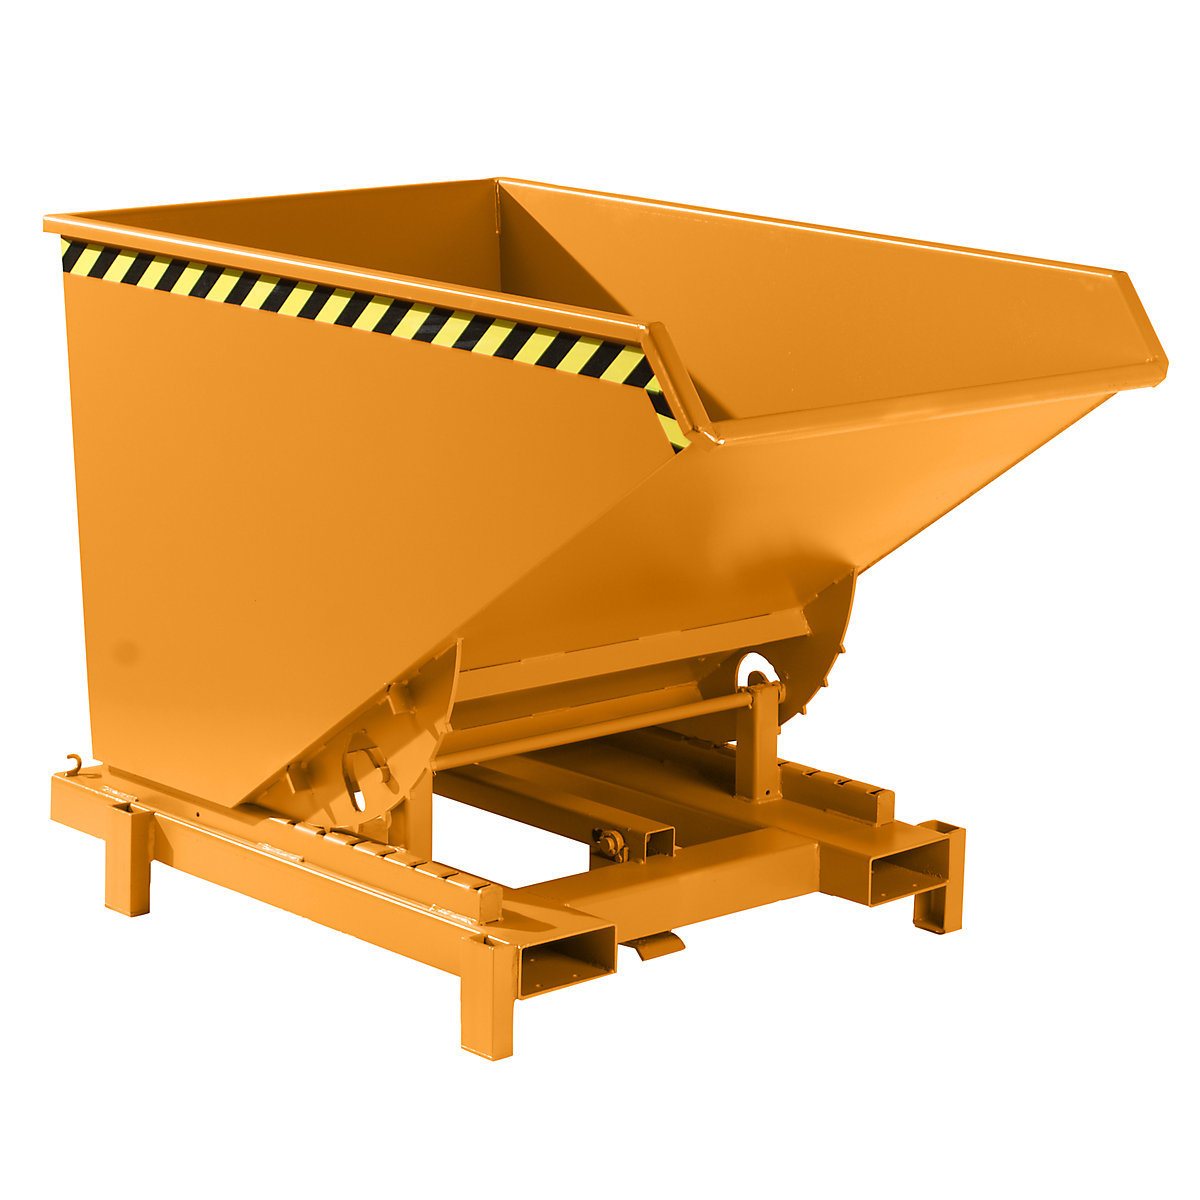 Heavy duty tilting skip – eurokraft pro, capacity 1.2 m³, max. load 4000 kg, red RAL 3000-8